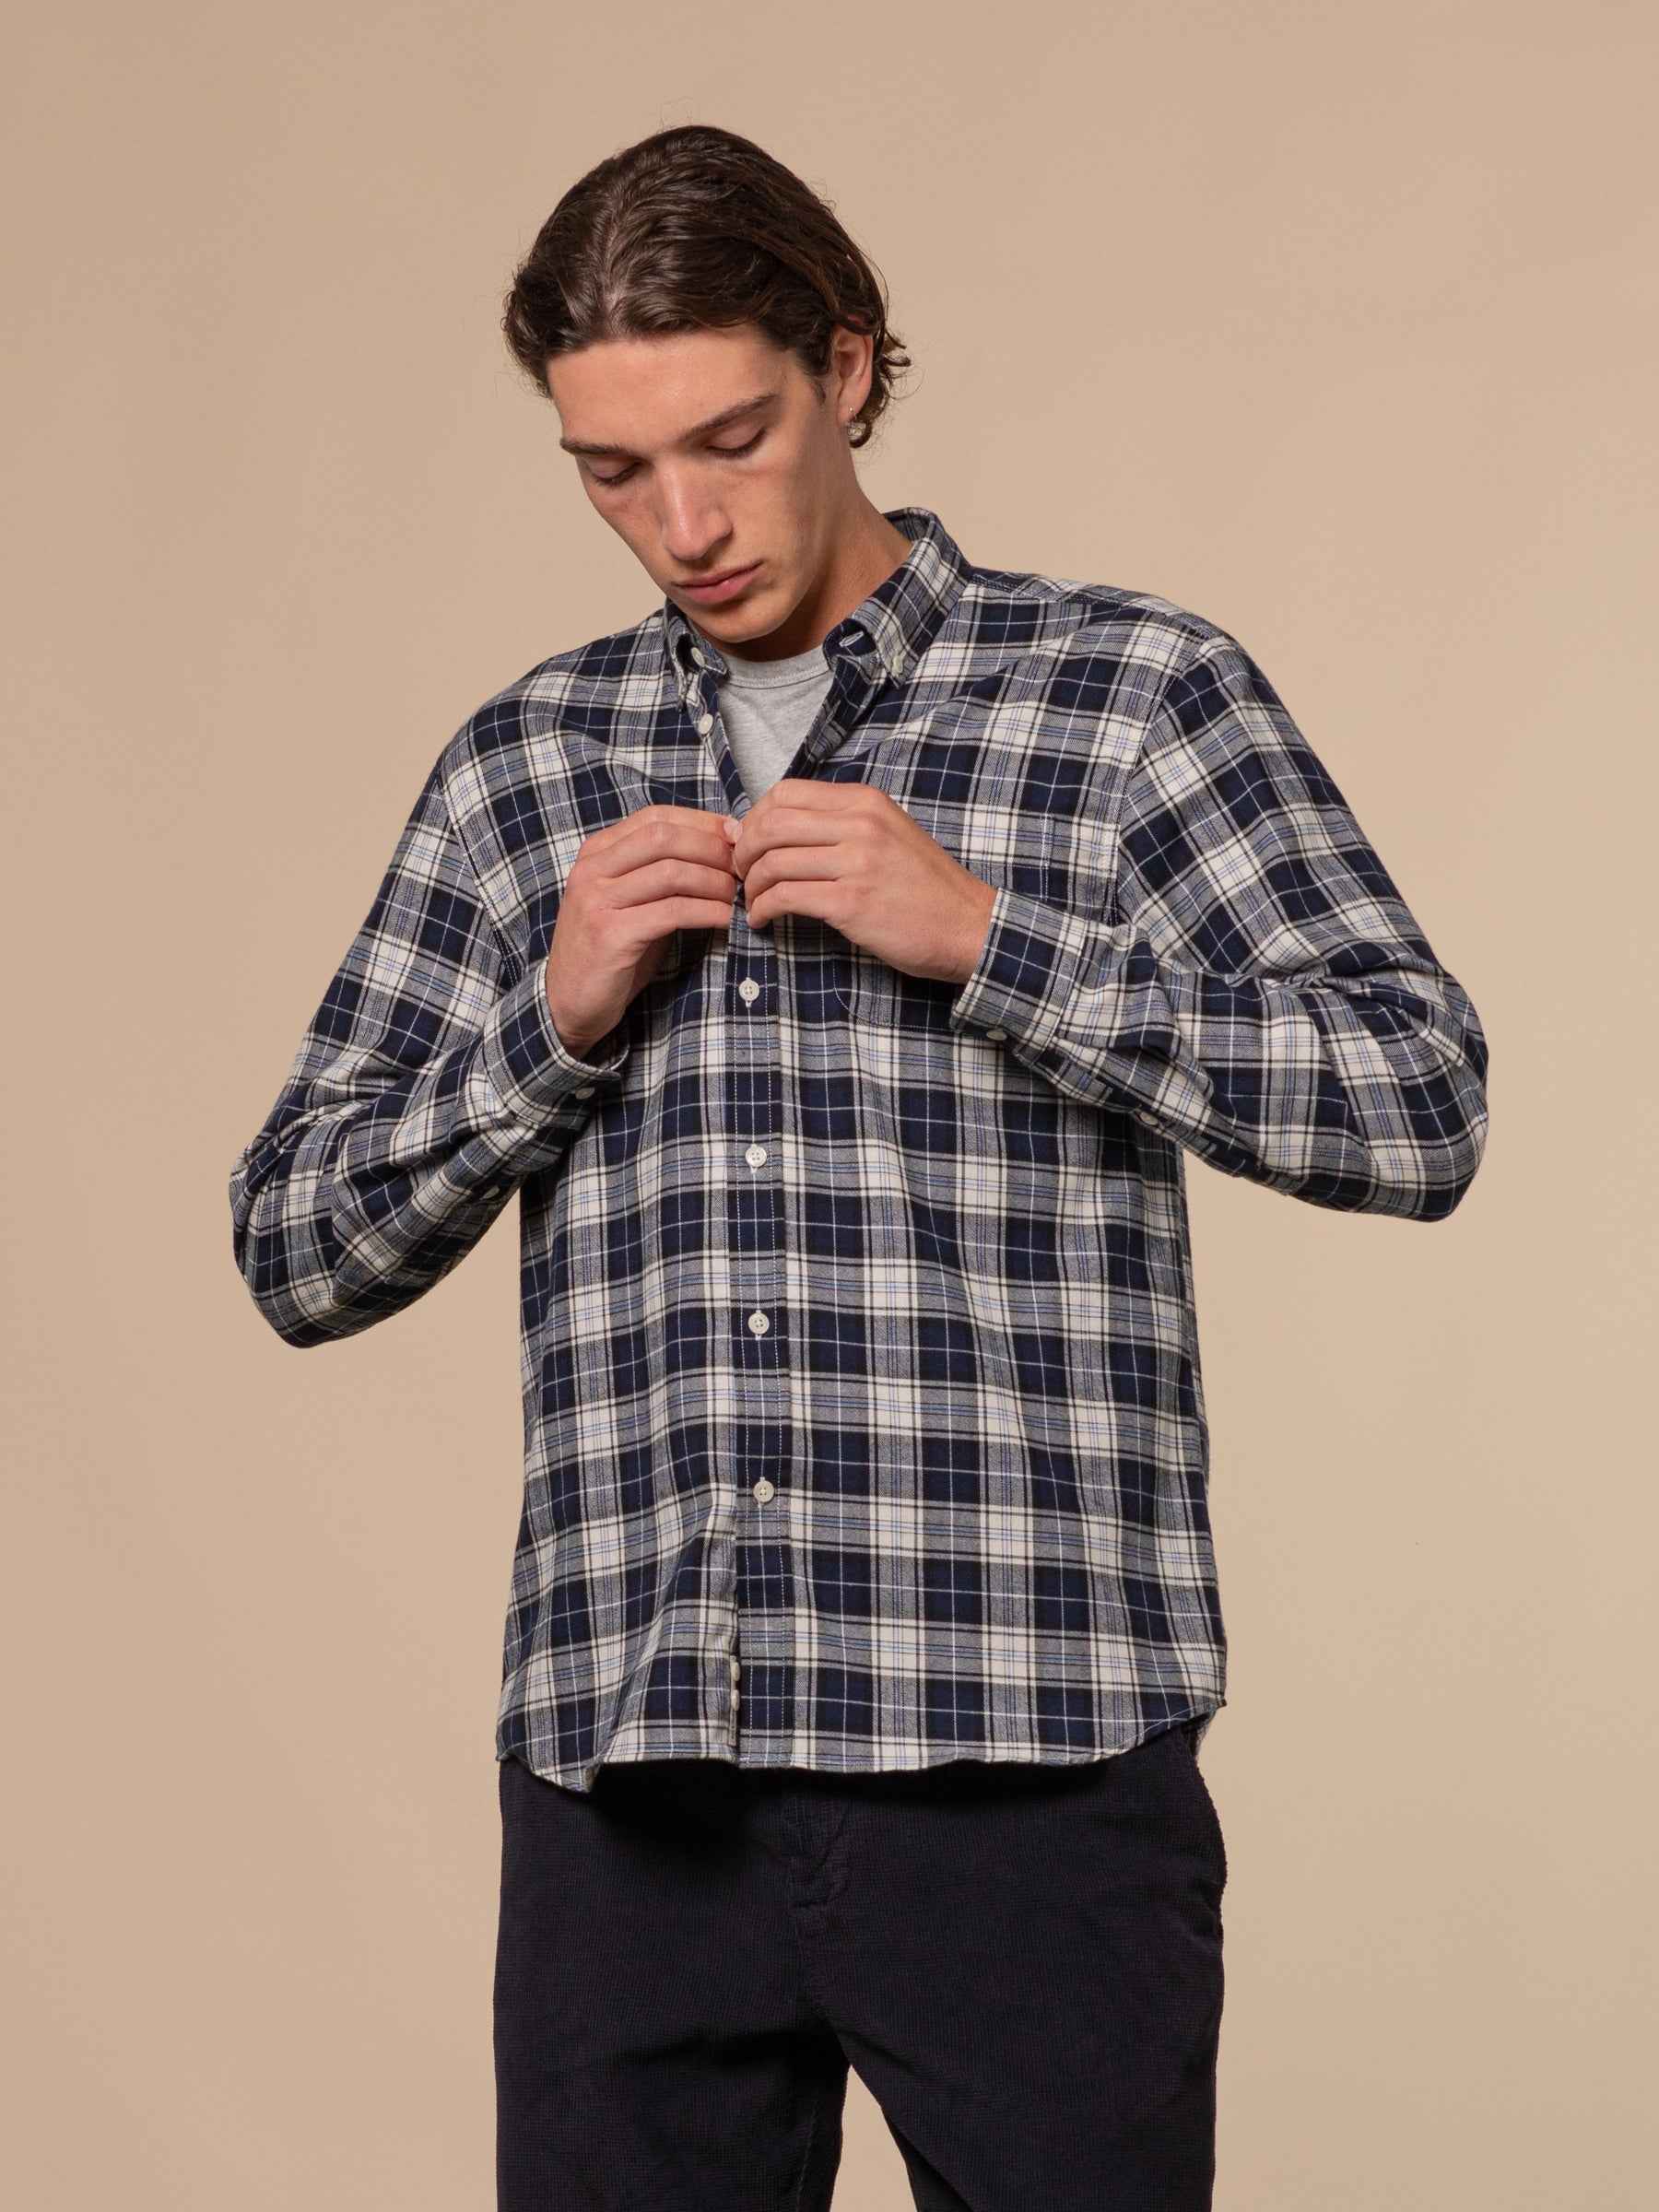 A model buttoning up the KESTIN Raeburn Shirt in Japanese Cotton.